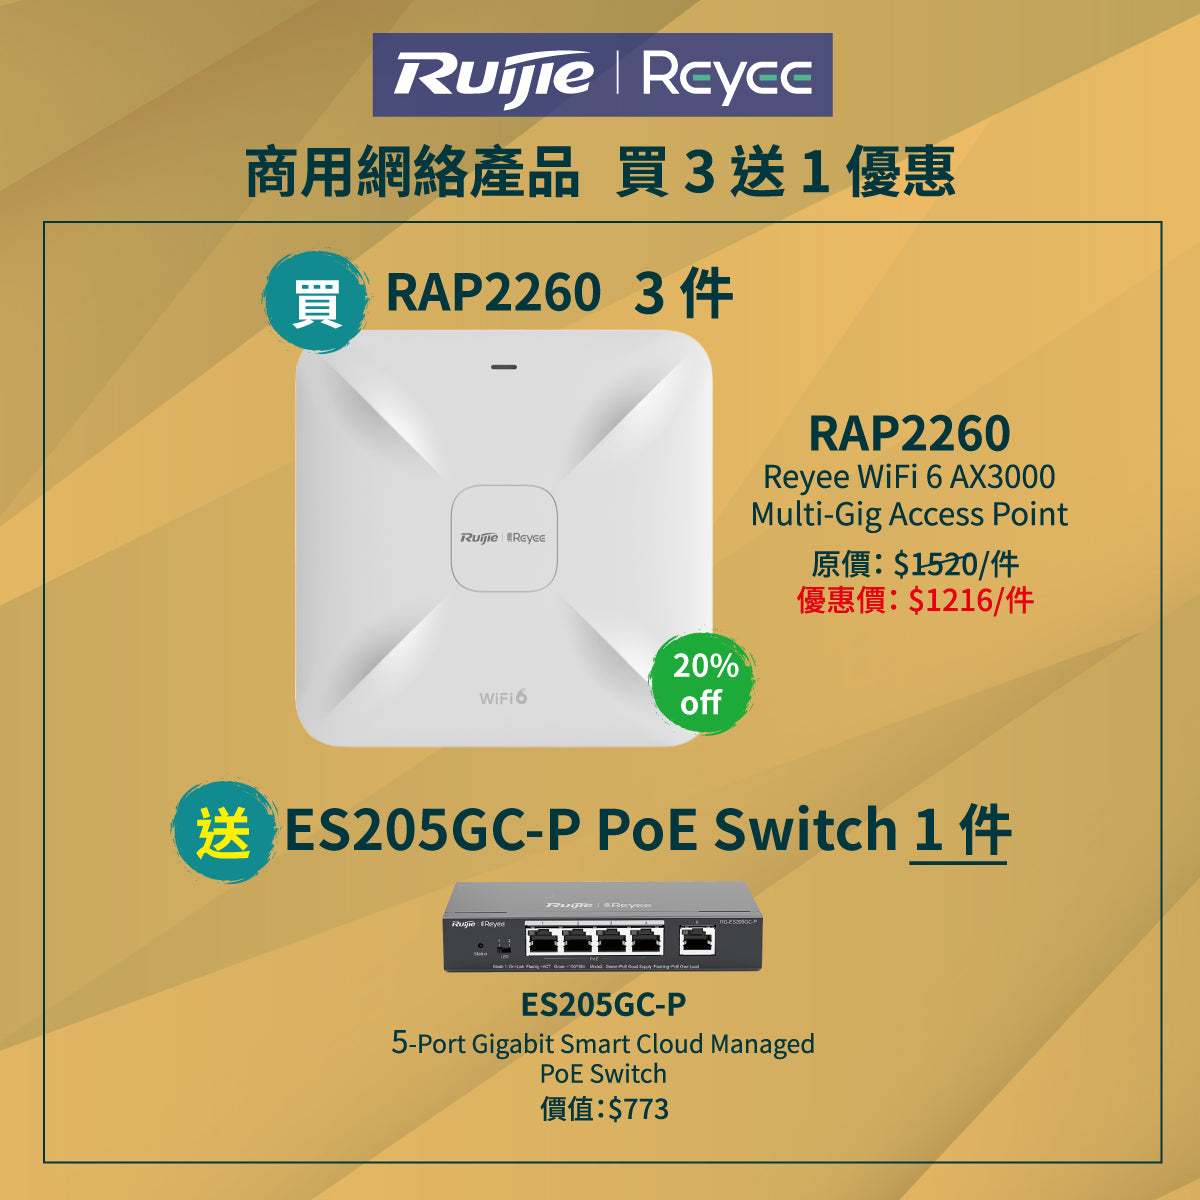 RG-RAP2260 Reyee Wi-Fi 6 AX3000 High Performance Multi-Gig Ceiling Access Point